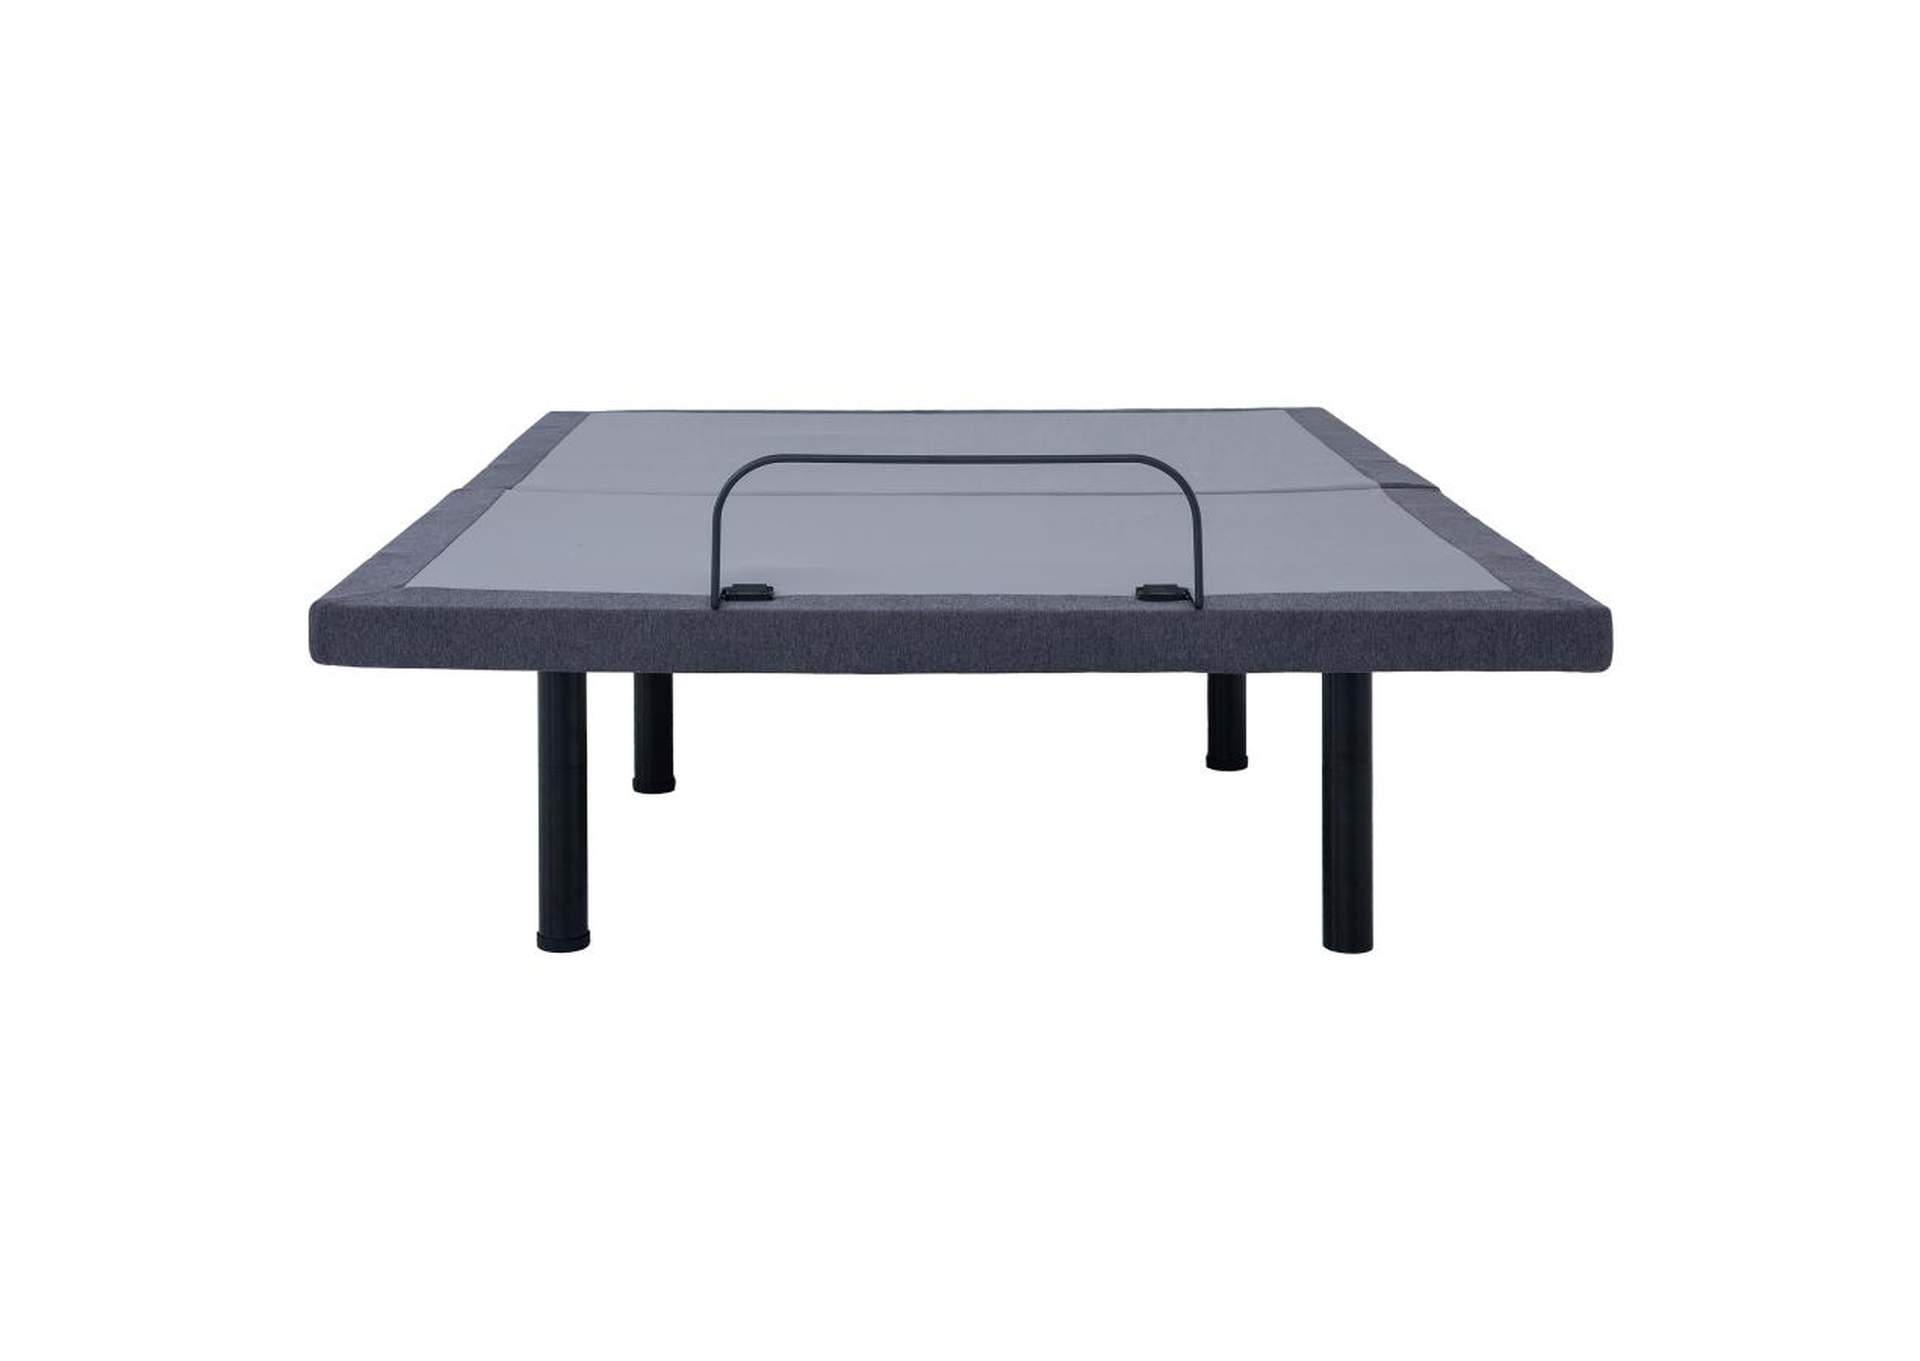 Negan Full Adjustable Bed Base Grey And Black,Coaster Furniture